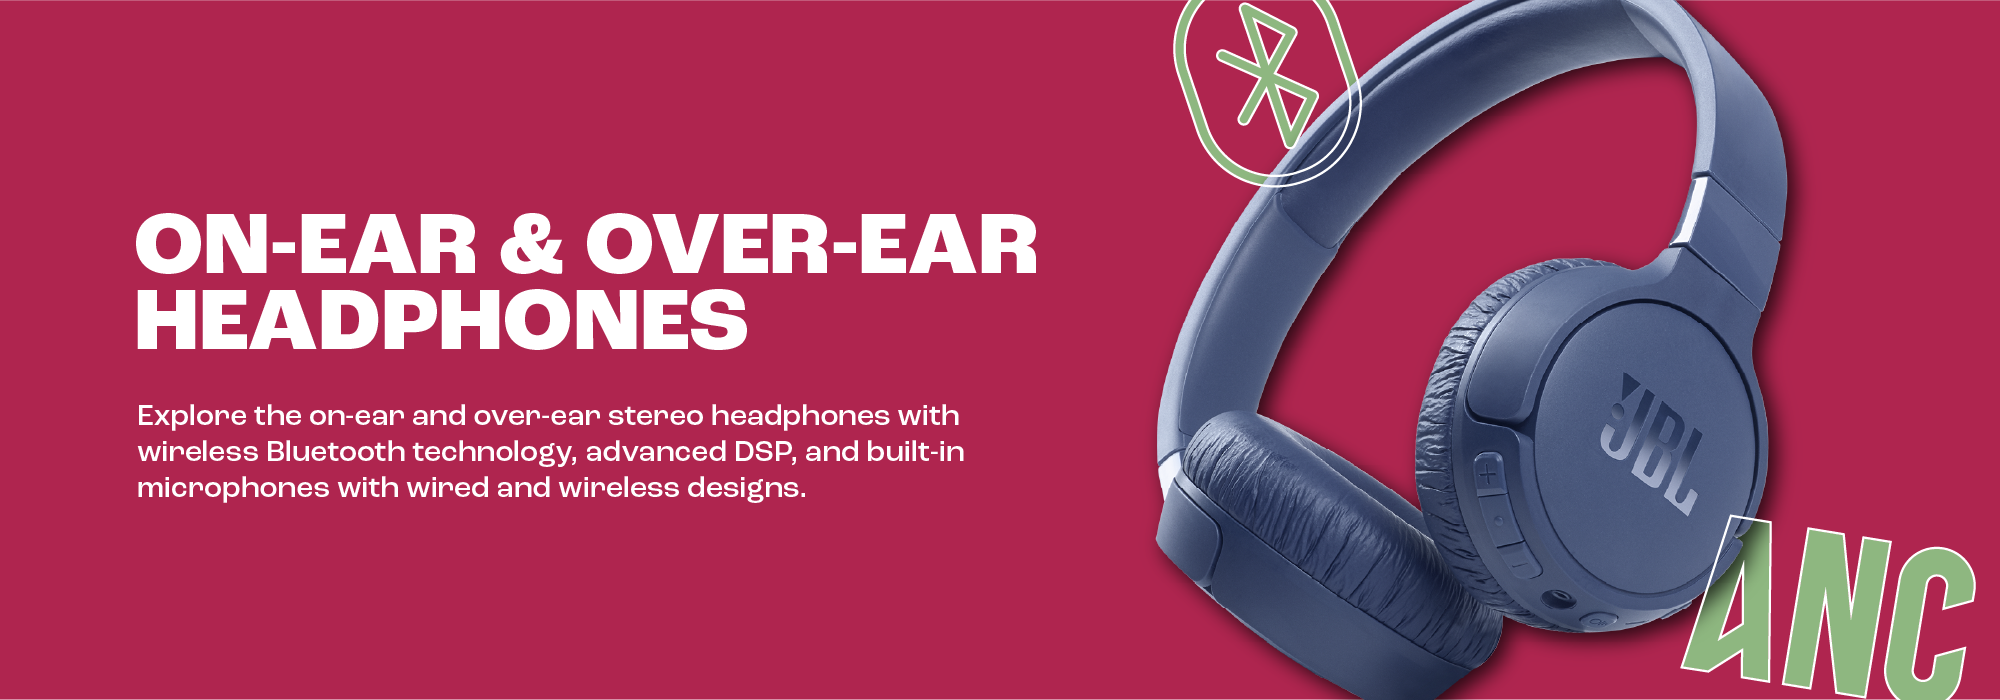 Over-Ear & On-Ear Headphones - JBL Store PH